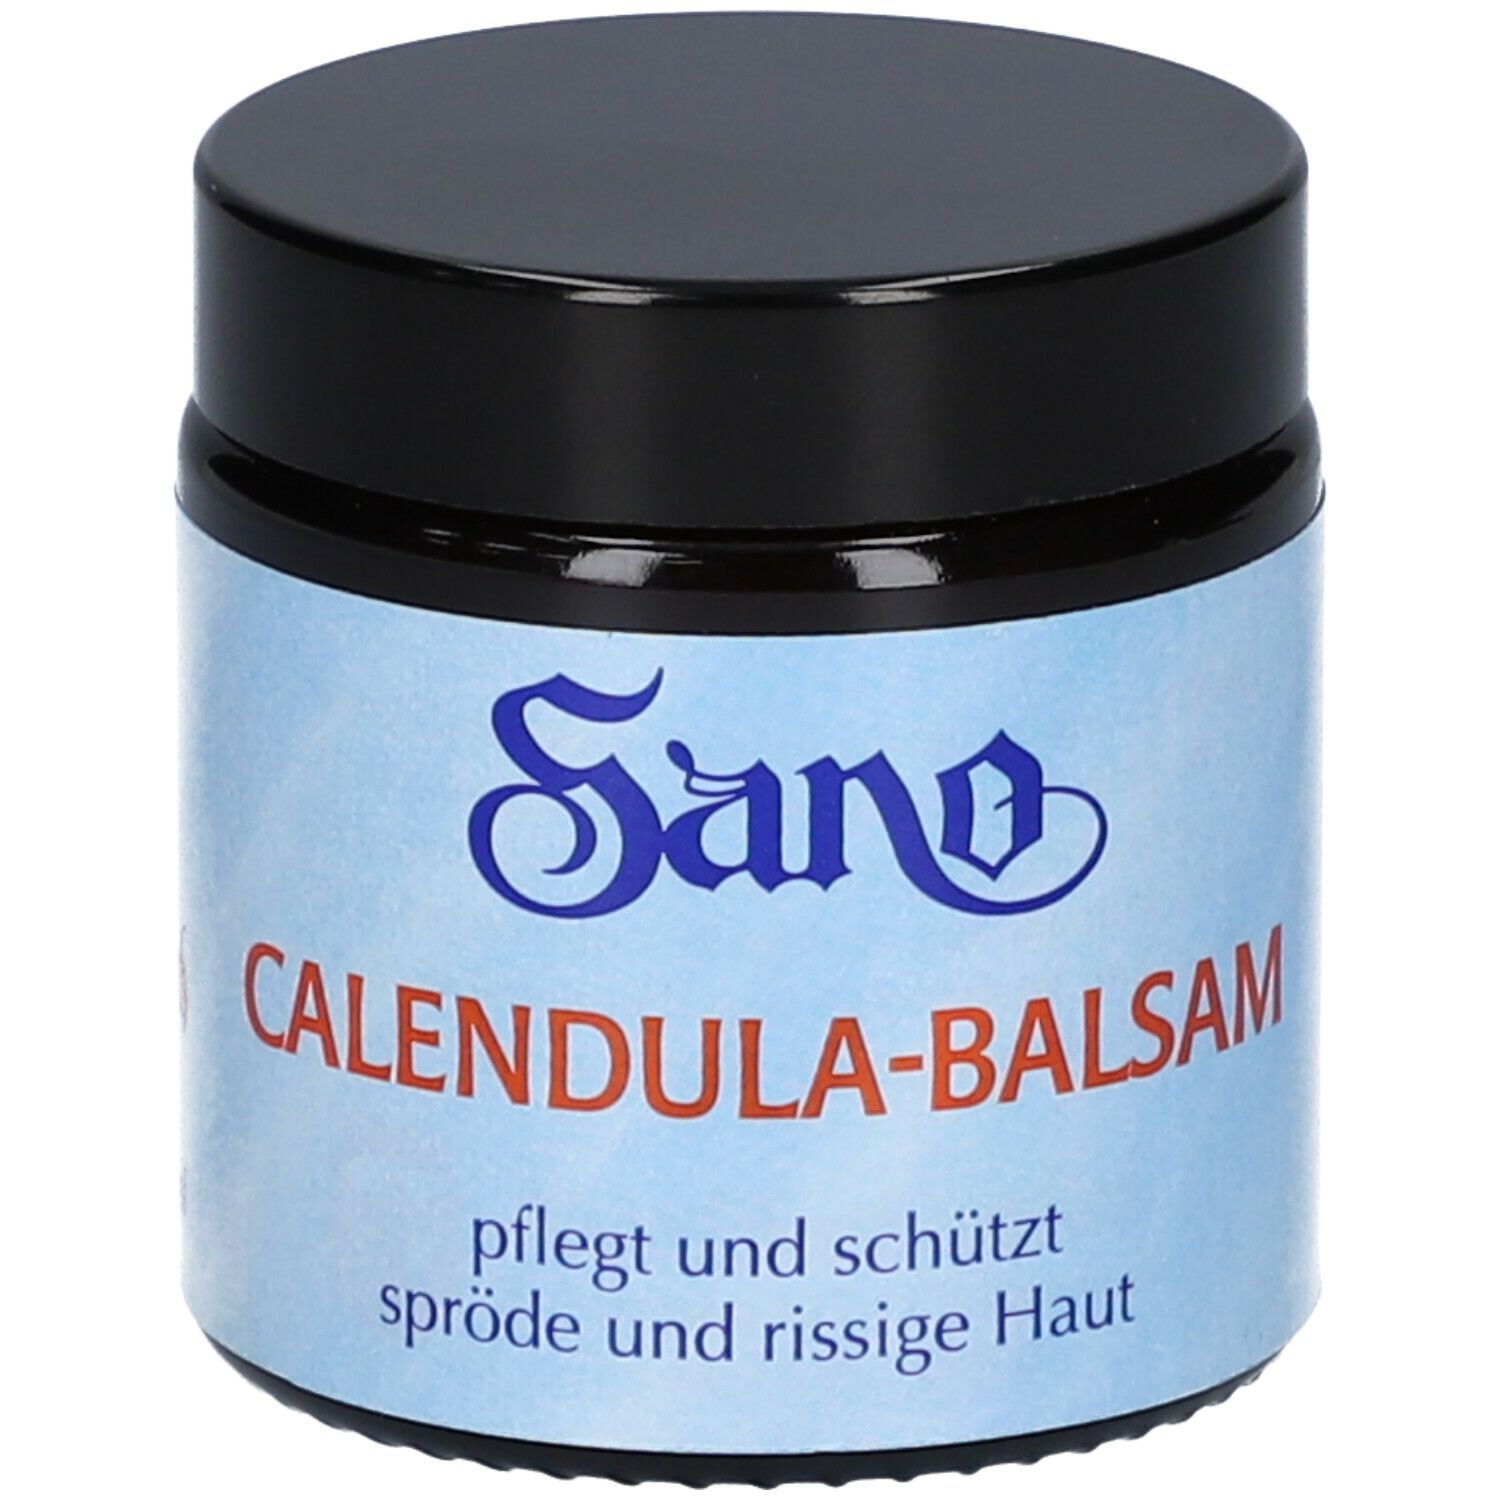 Sano Calendula-Balsam